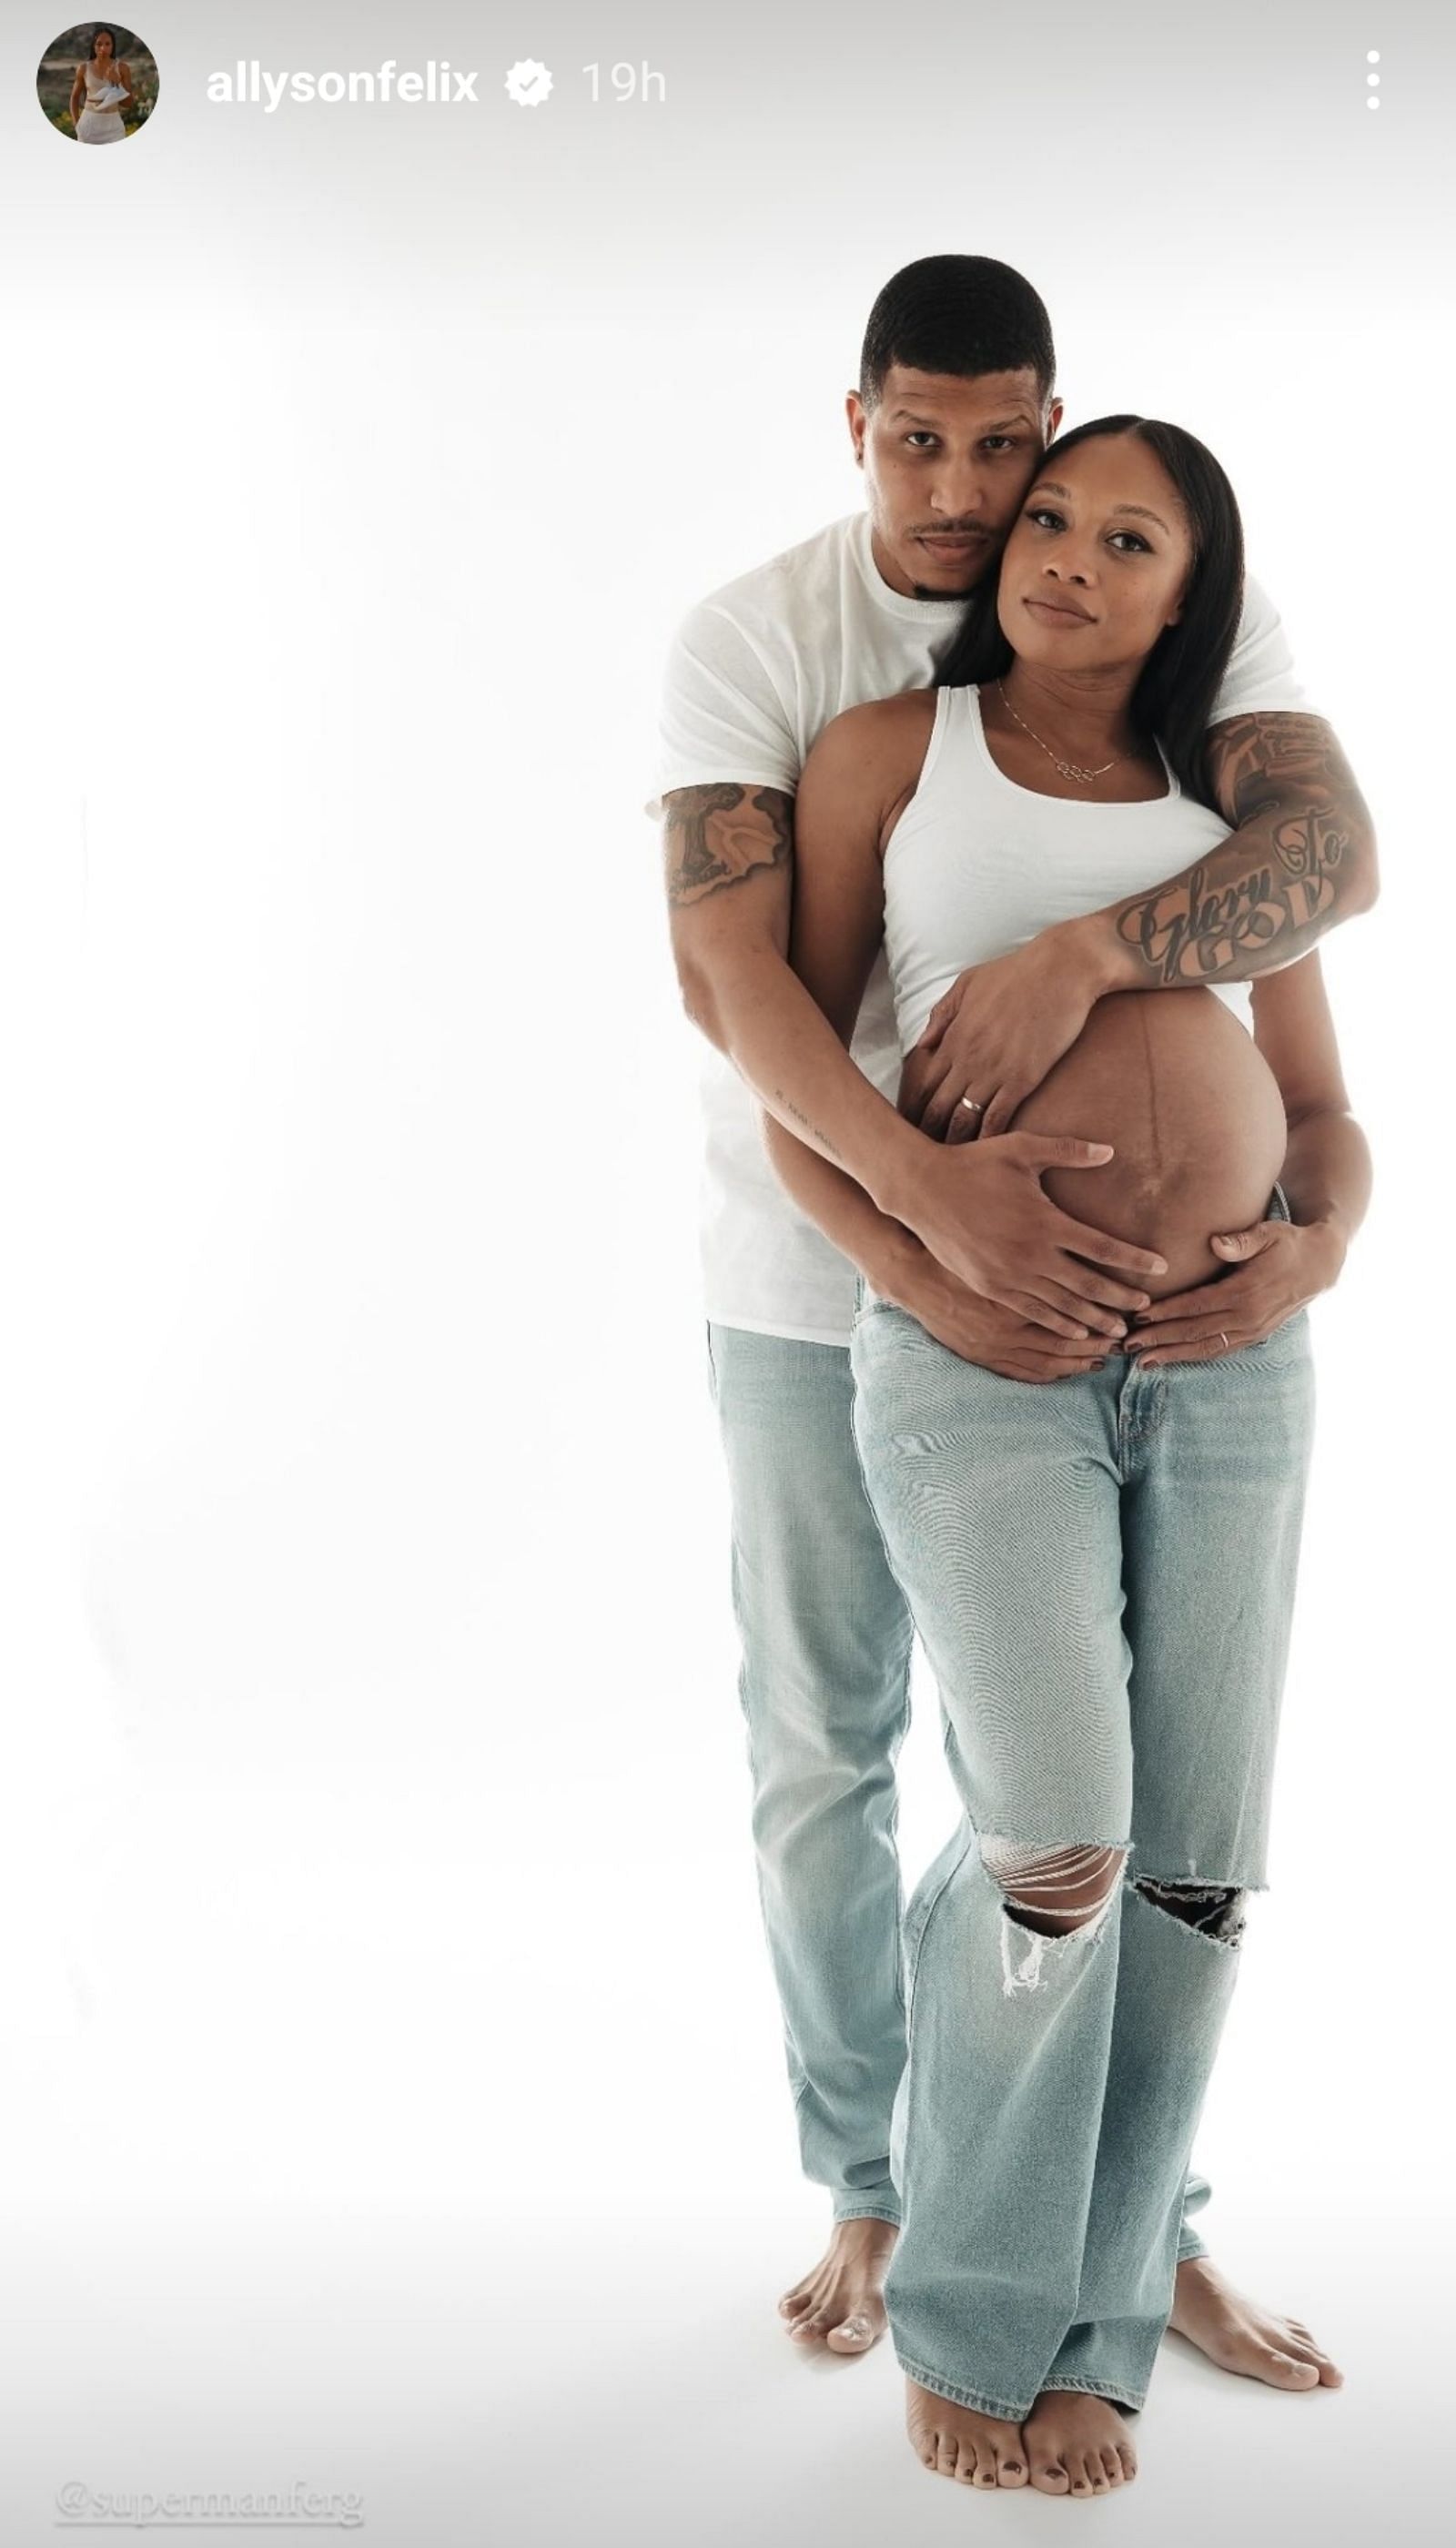 Ferguson and Allyson posing with Allyson&#039;s baby bump (via Allyson&#039;s Instagram story)